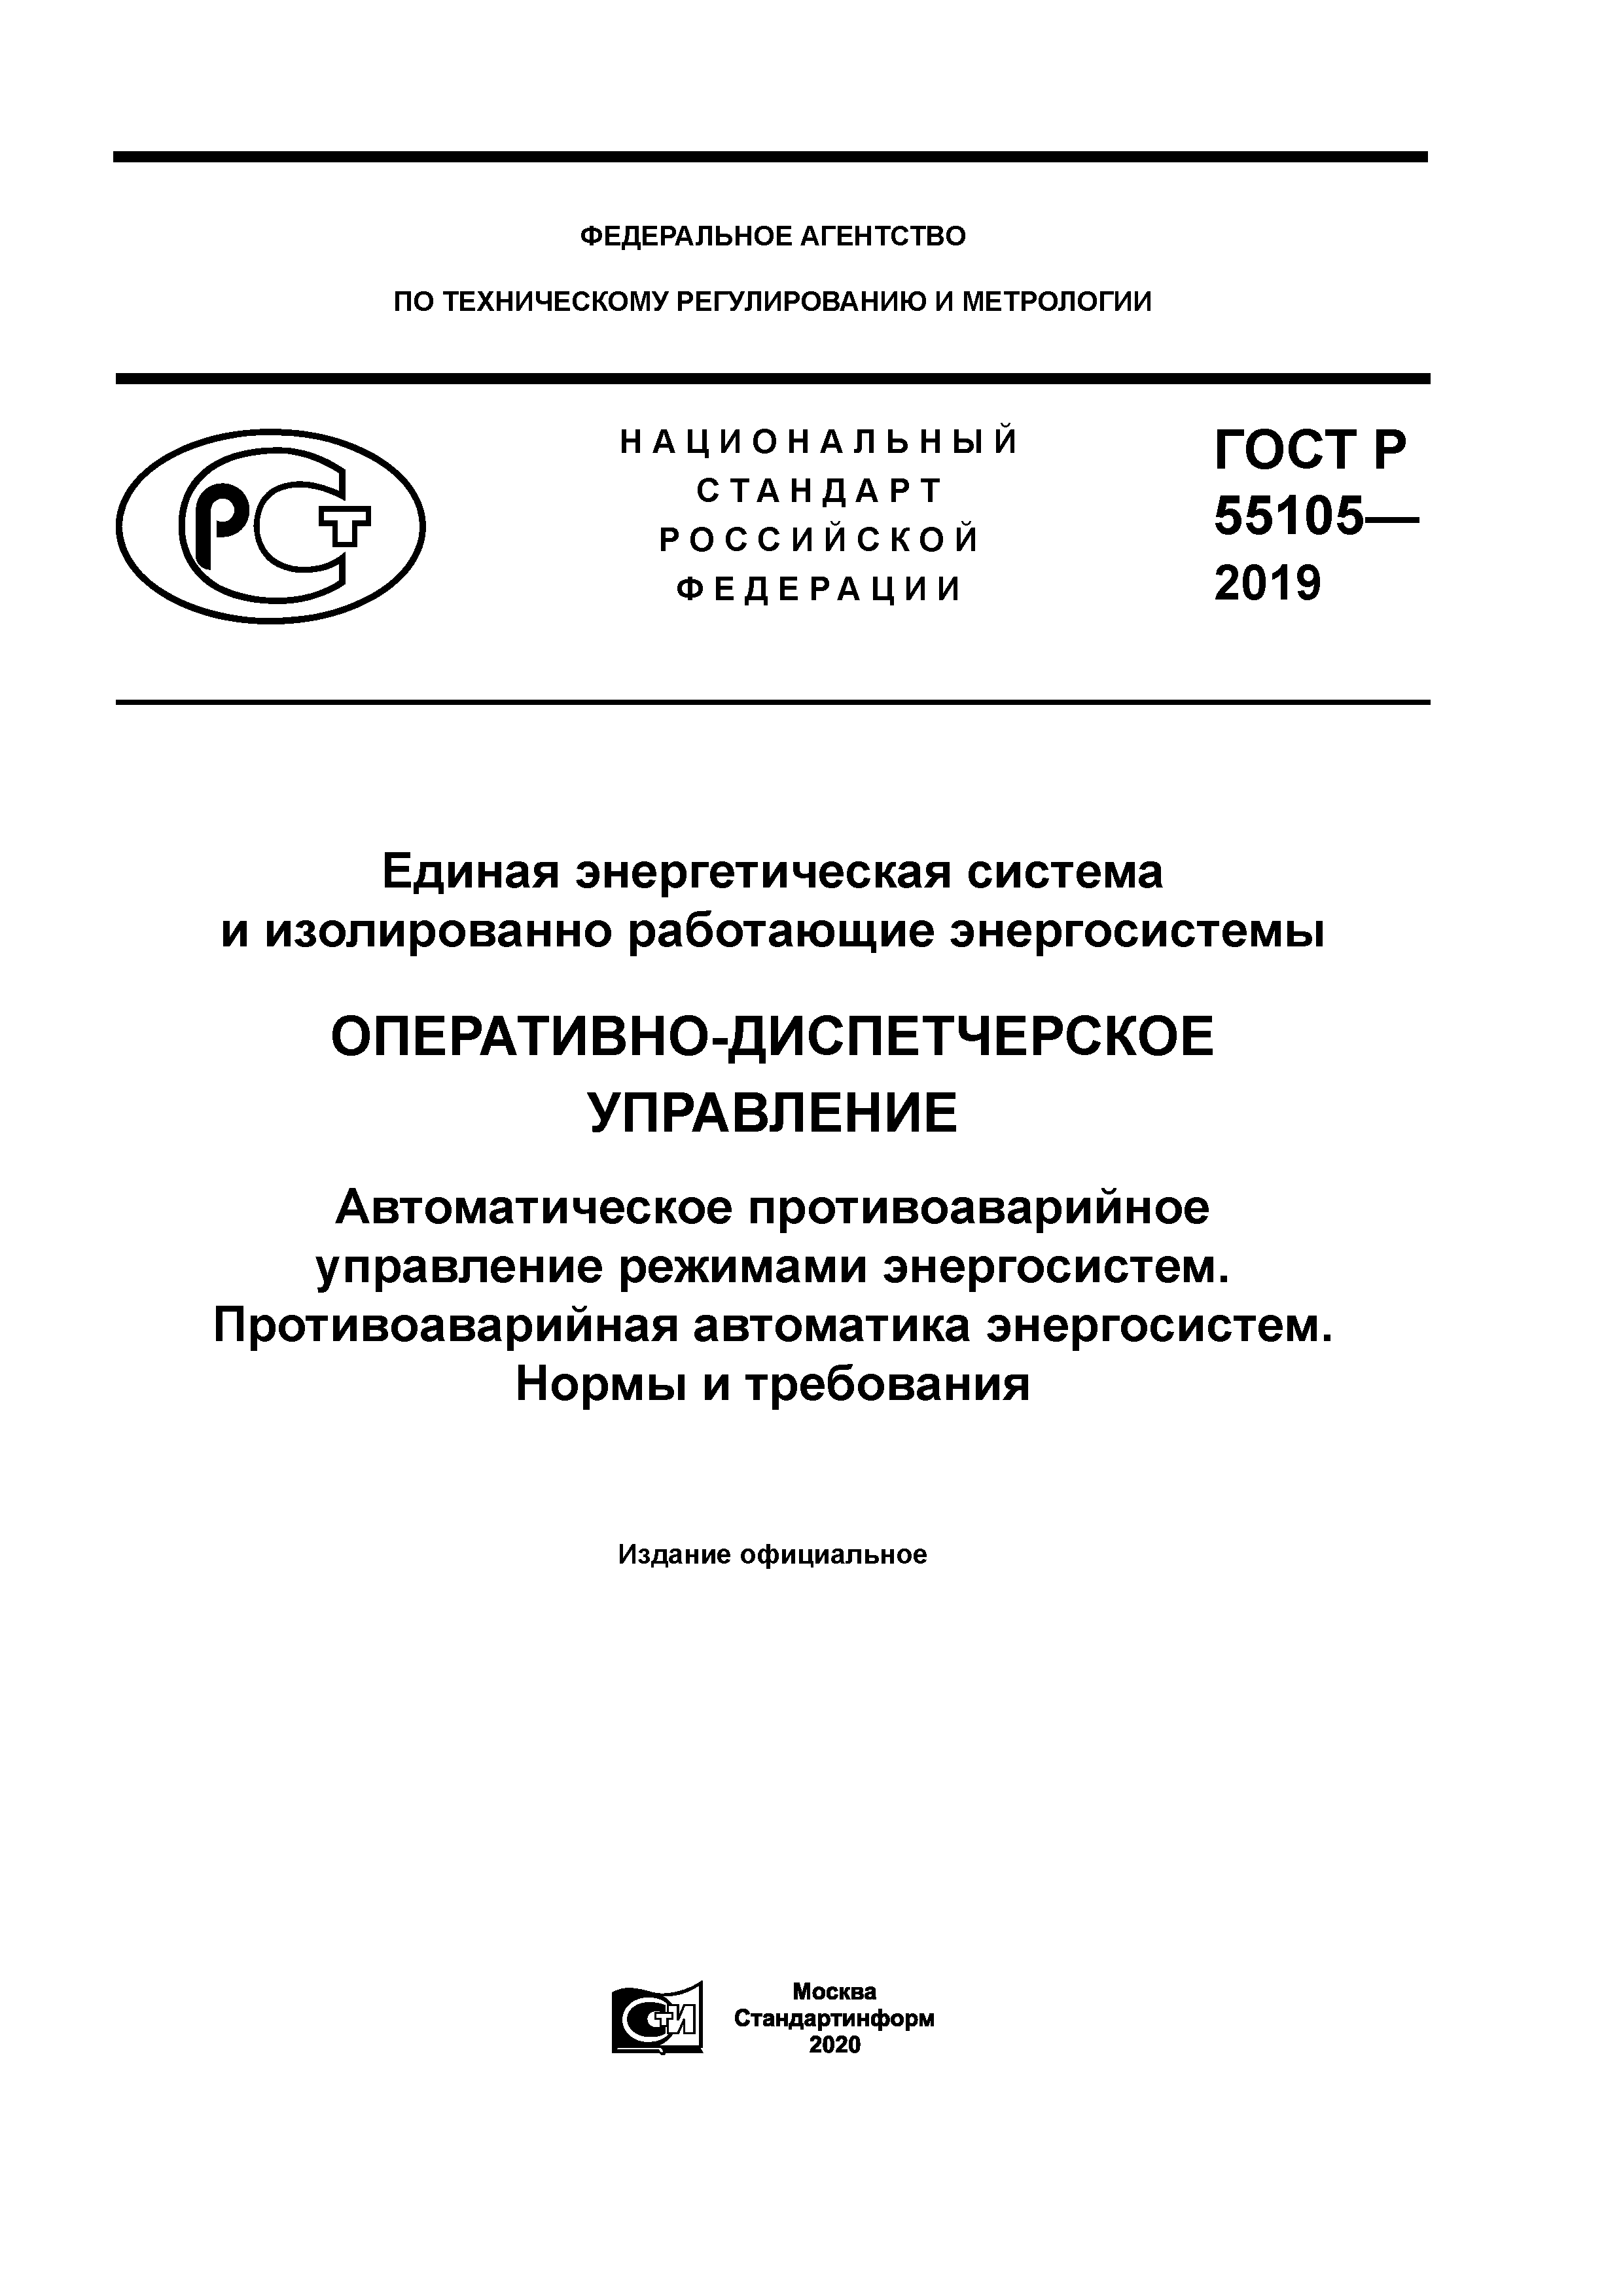 ГОСТ Р 55105-2019